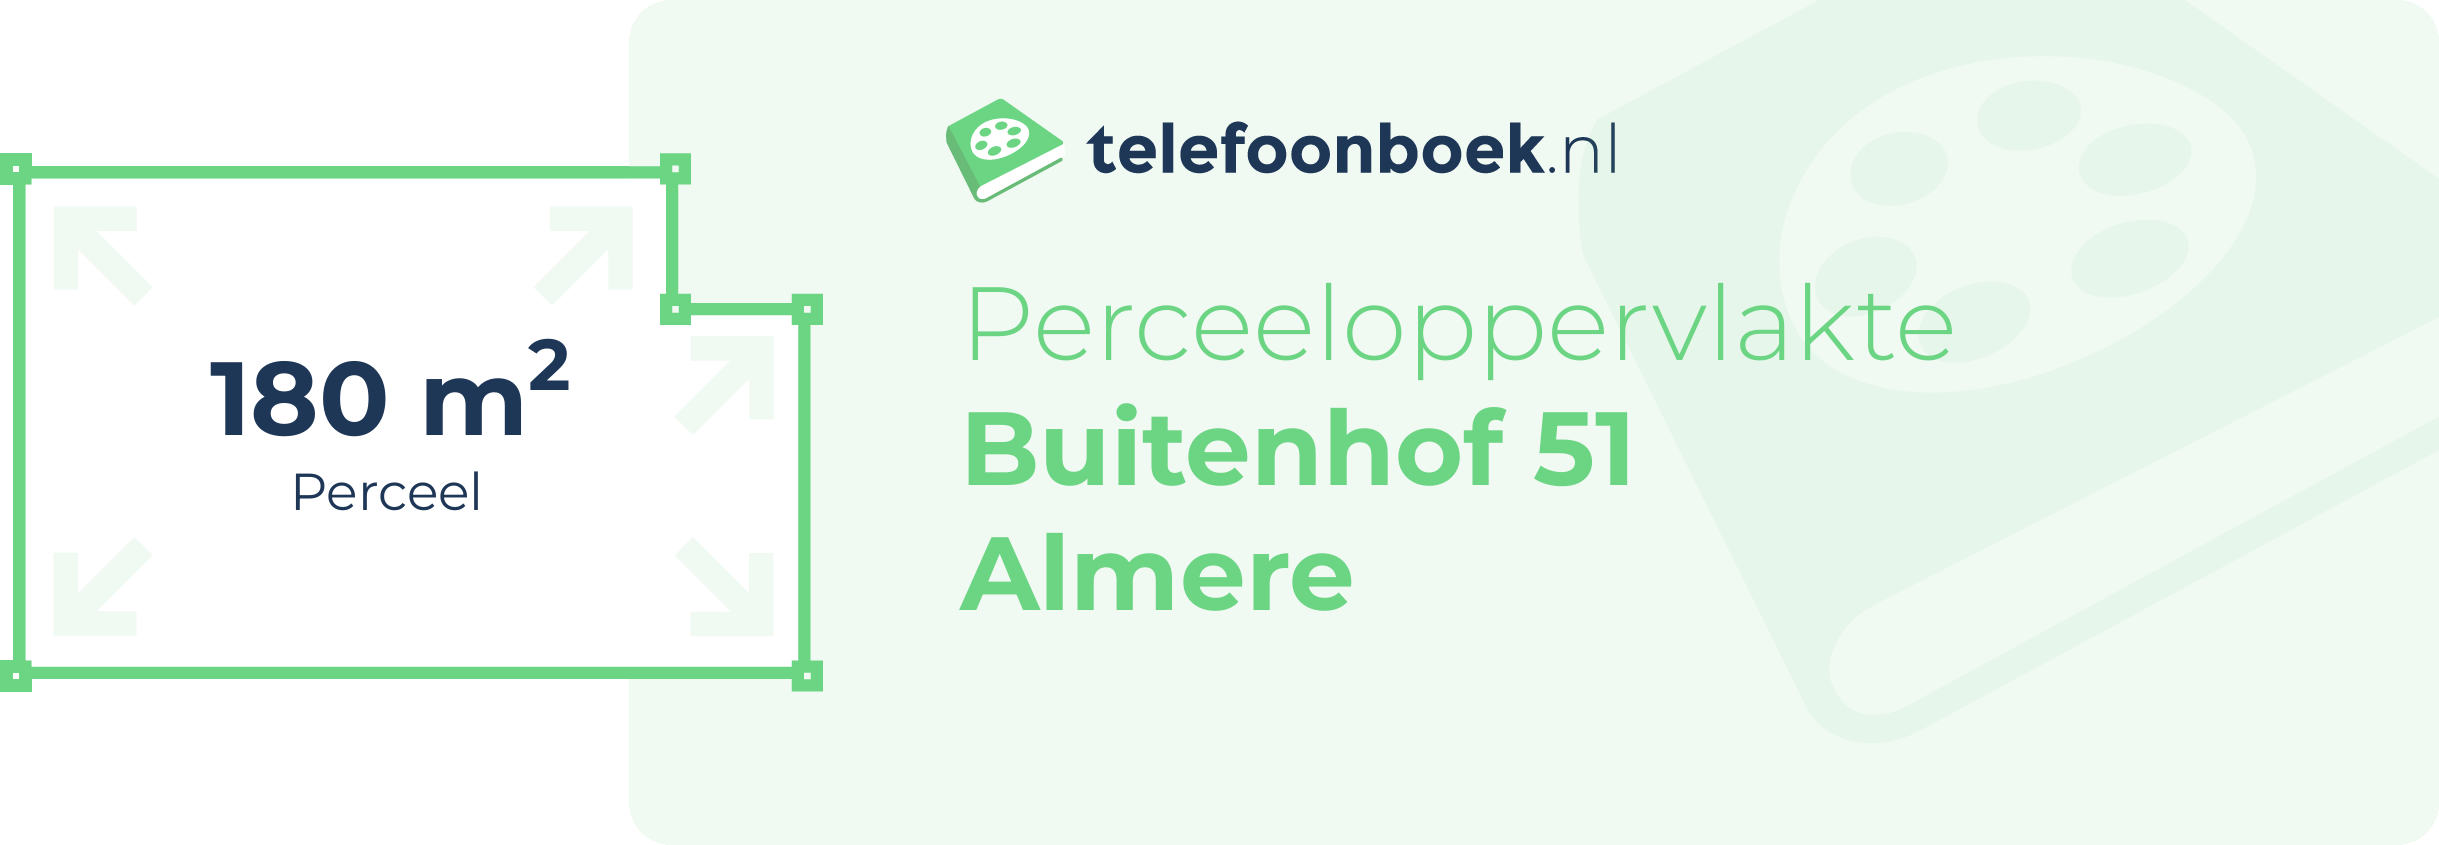 Perceeloppervlakte Buitenhof 51 Almere